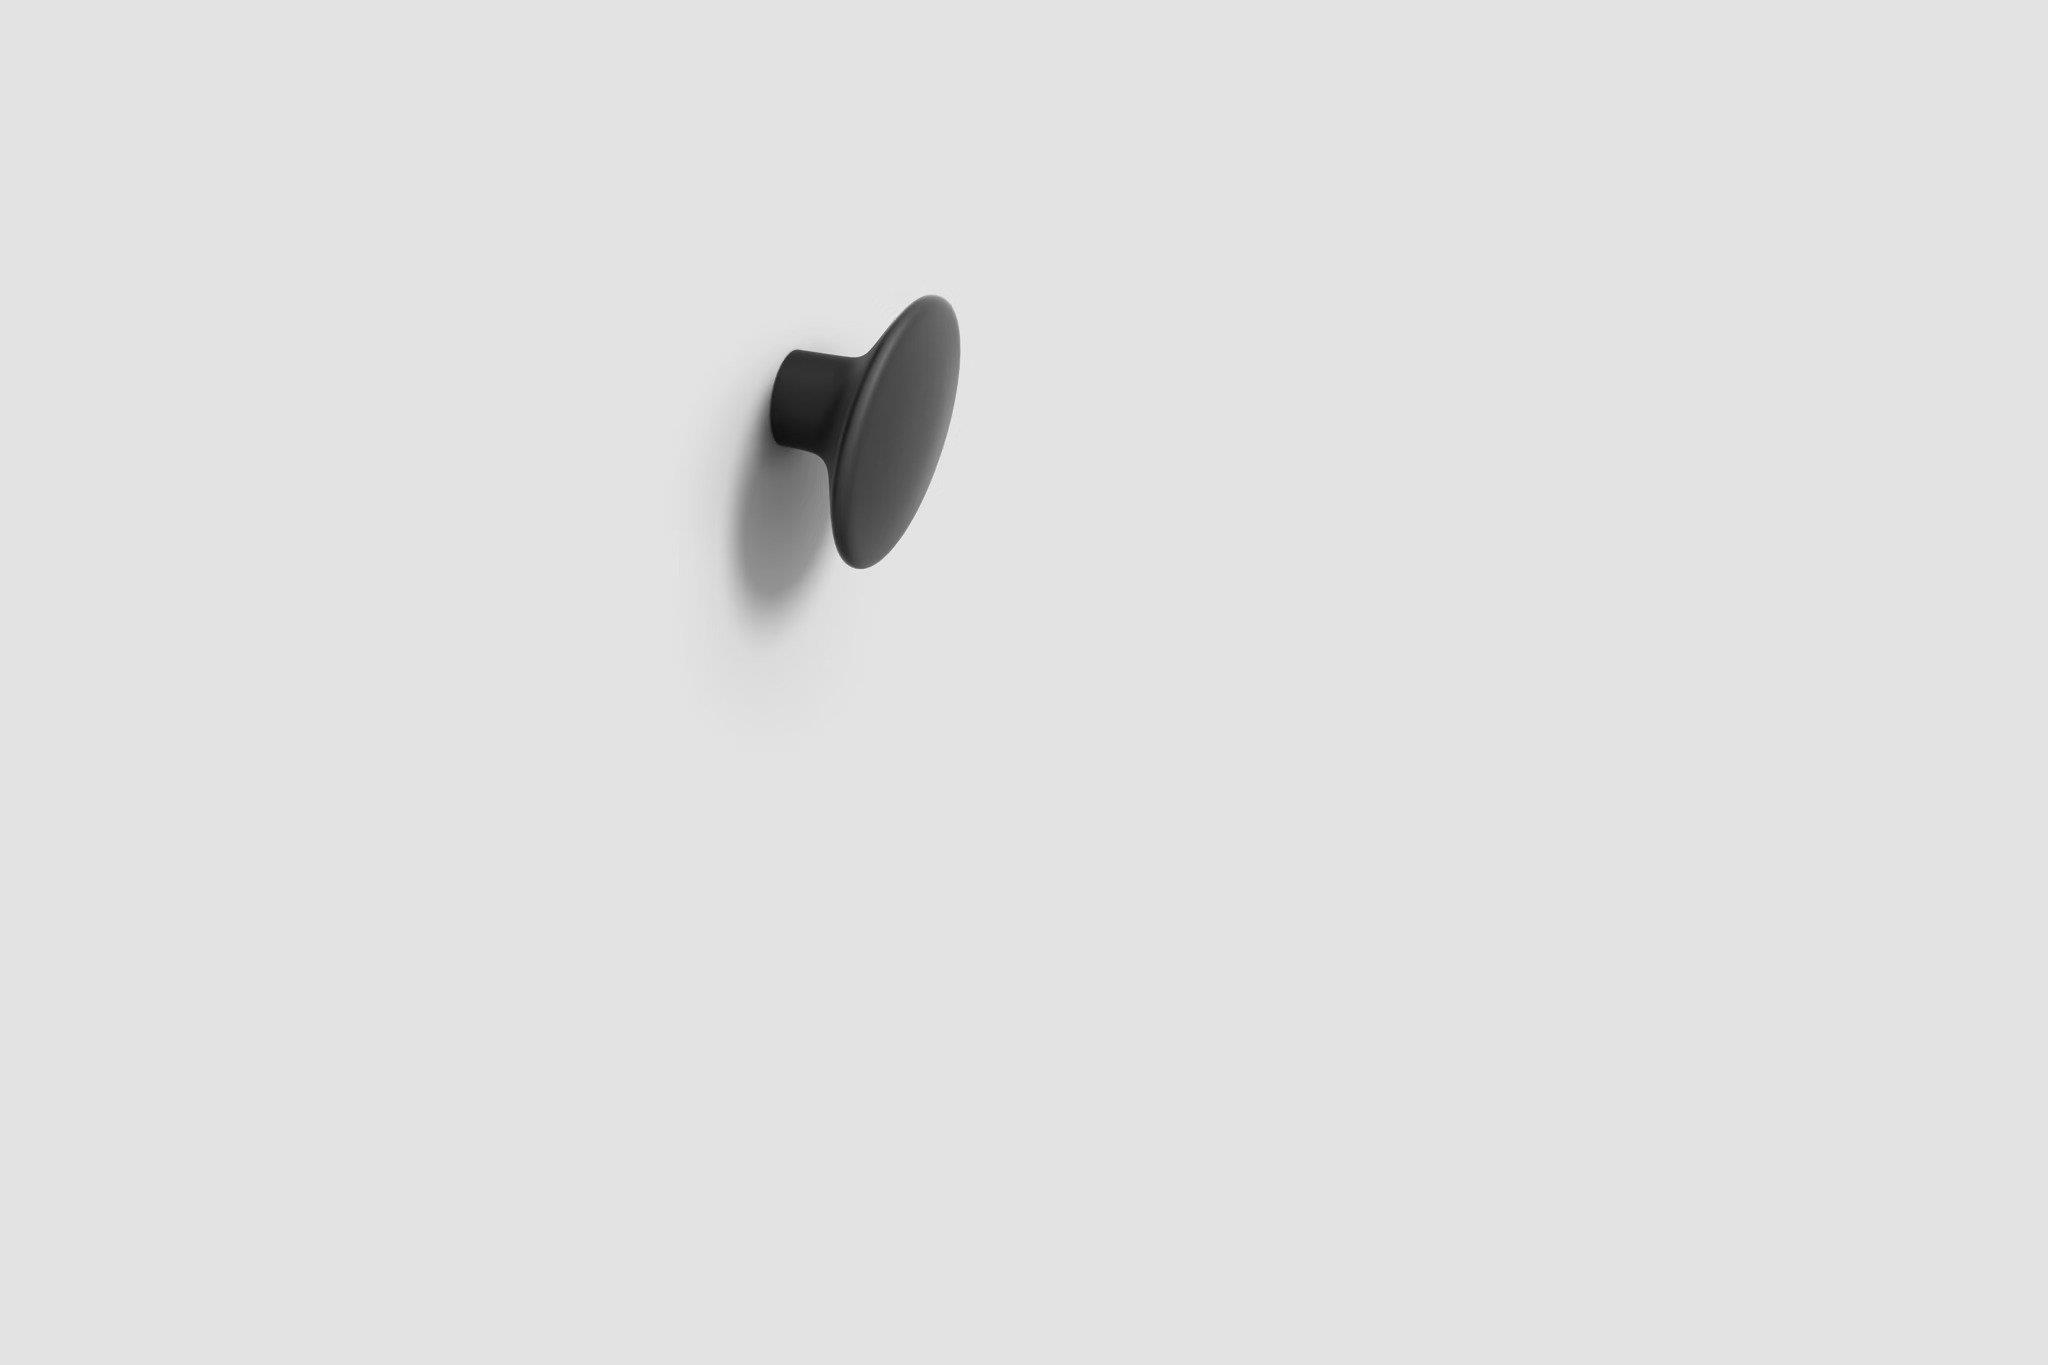 Sonos Wall Hook zwart - Speaker beugel